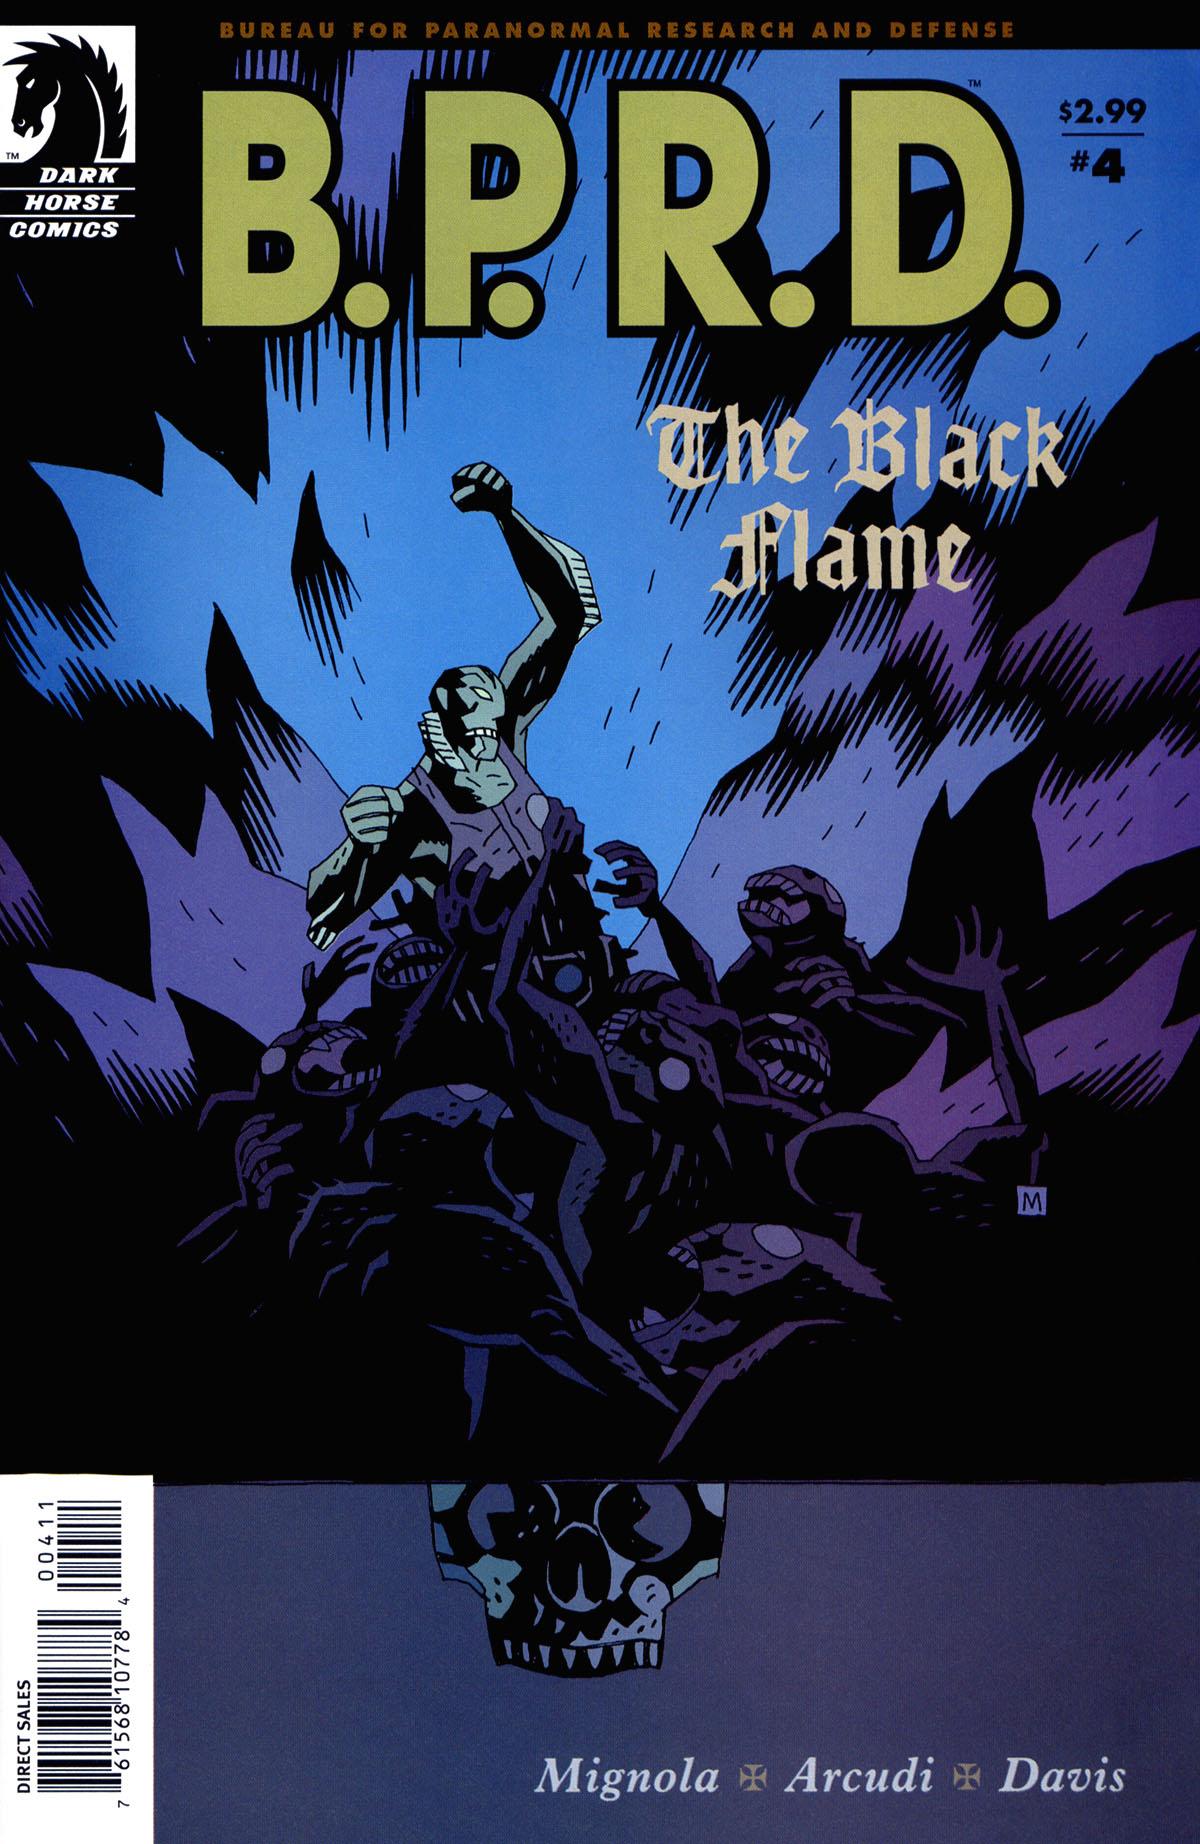 B.P.R.D.: The Black Flame Vol. 1 #4